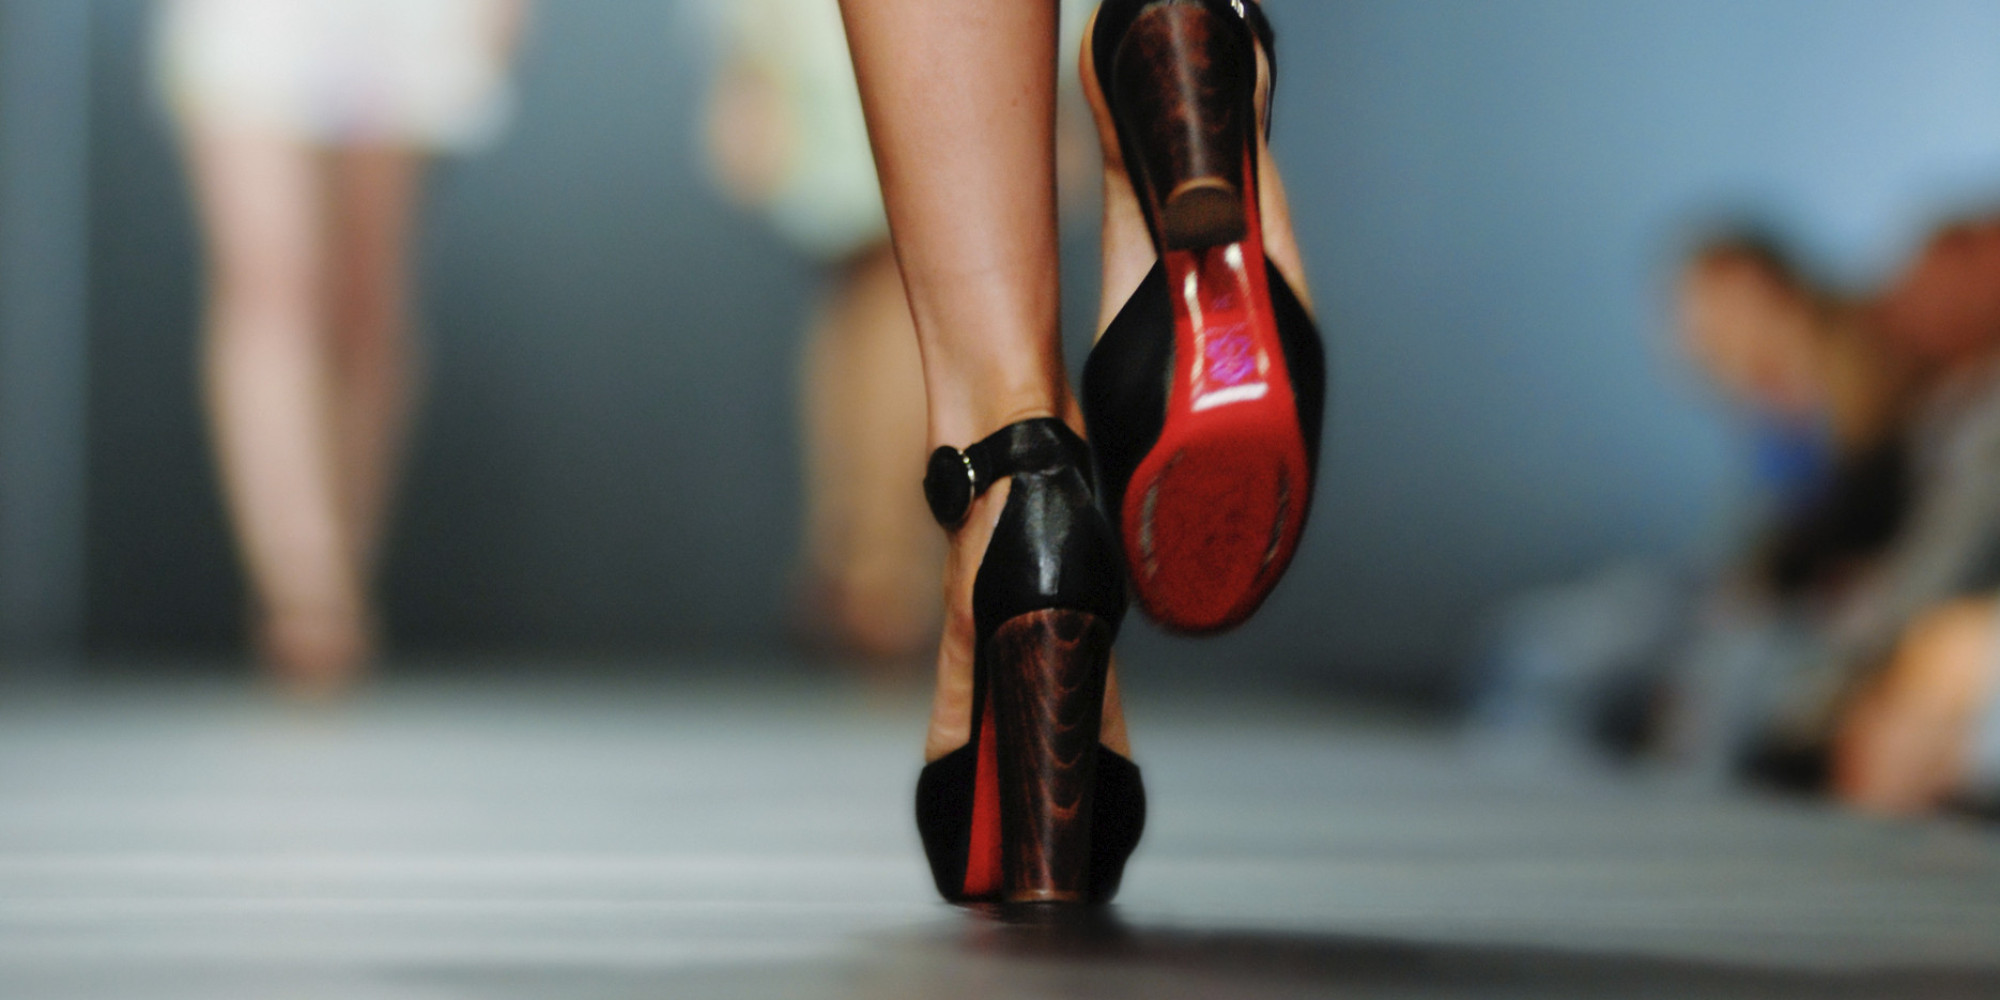 fashion show runway aisle seated legs